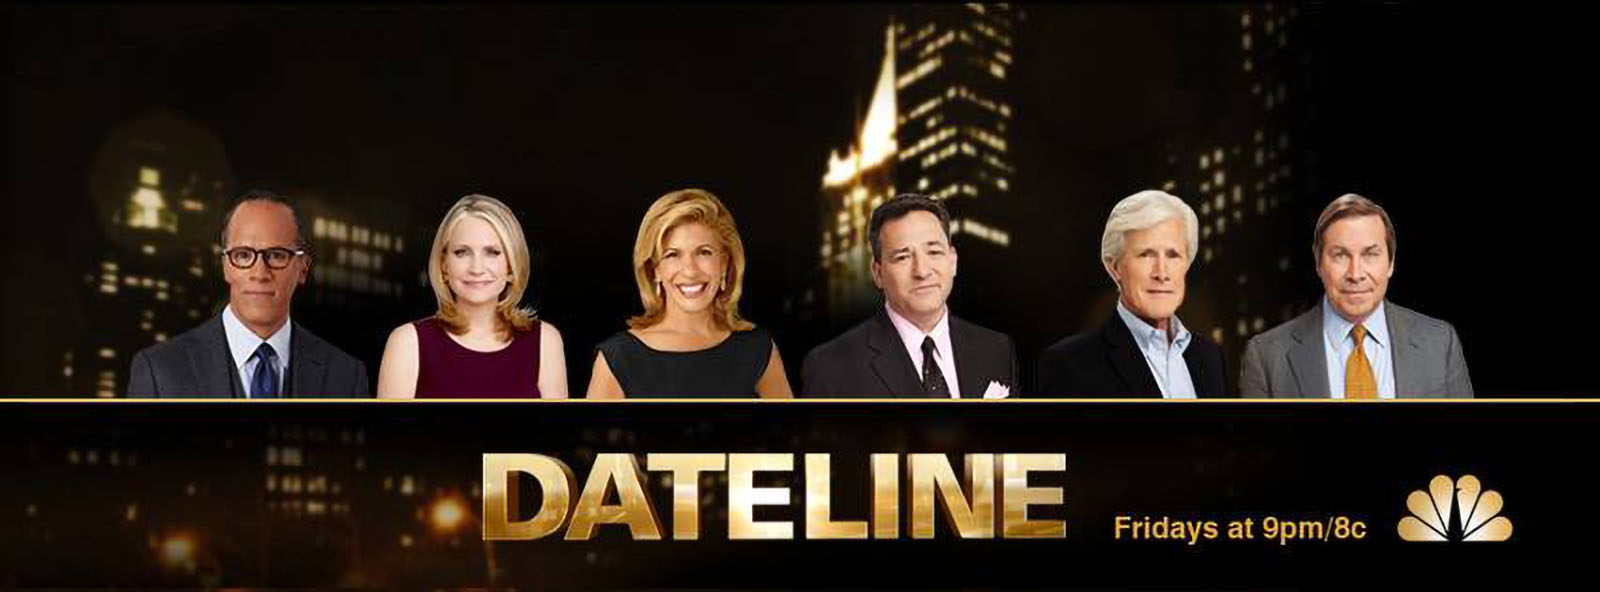 Dateline NBC Show